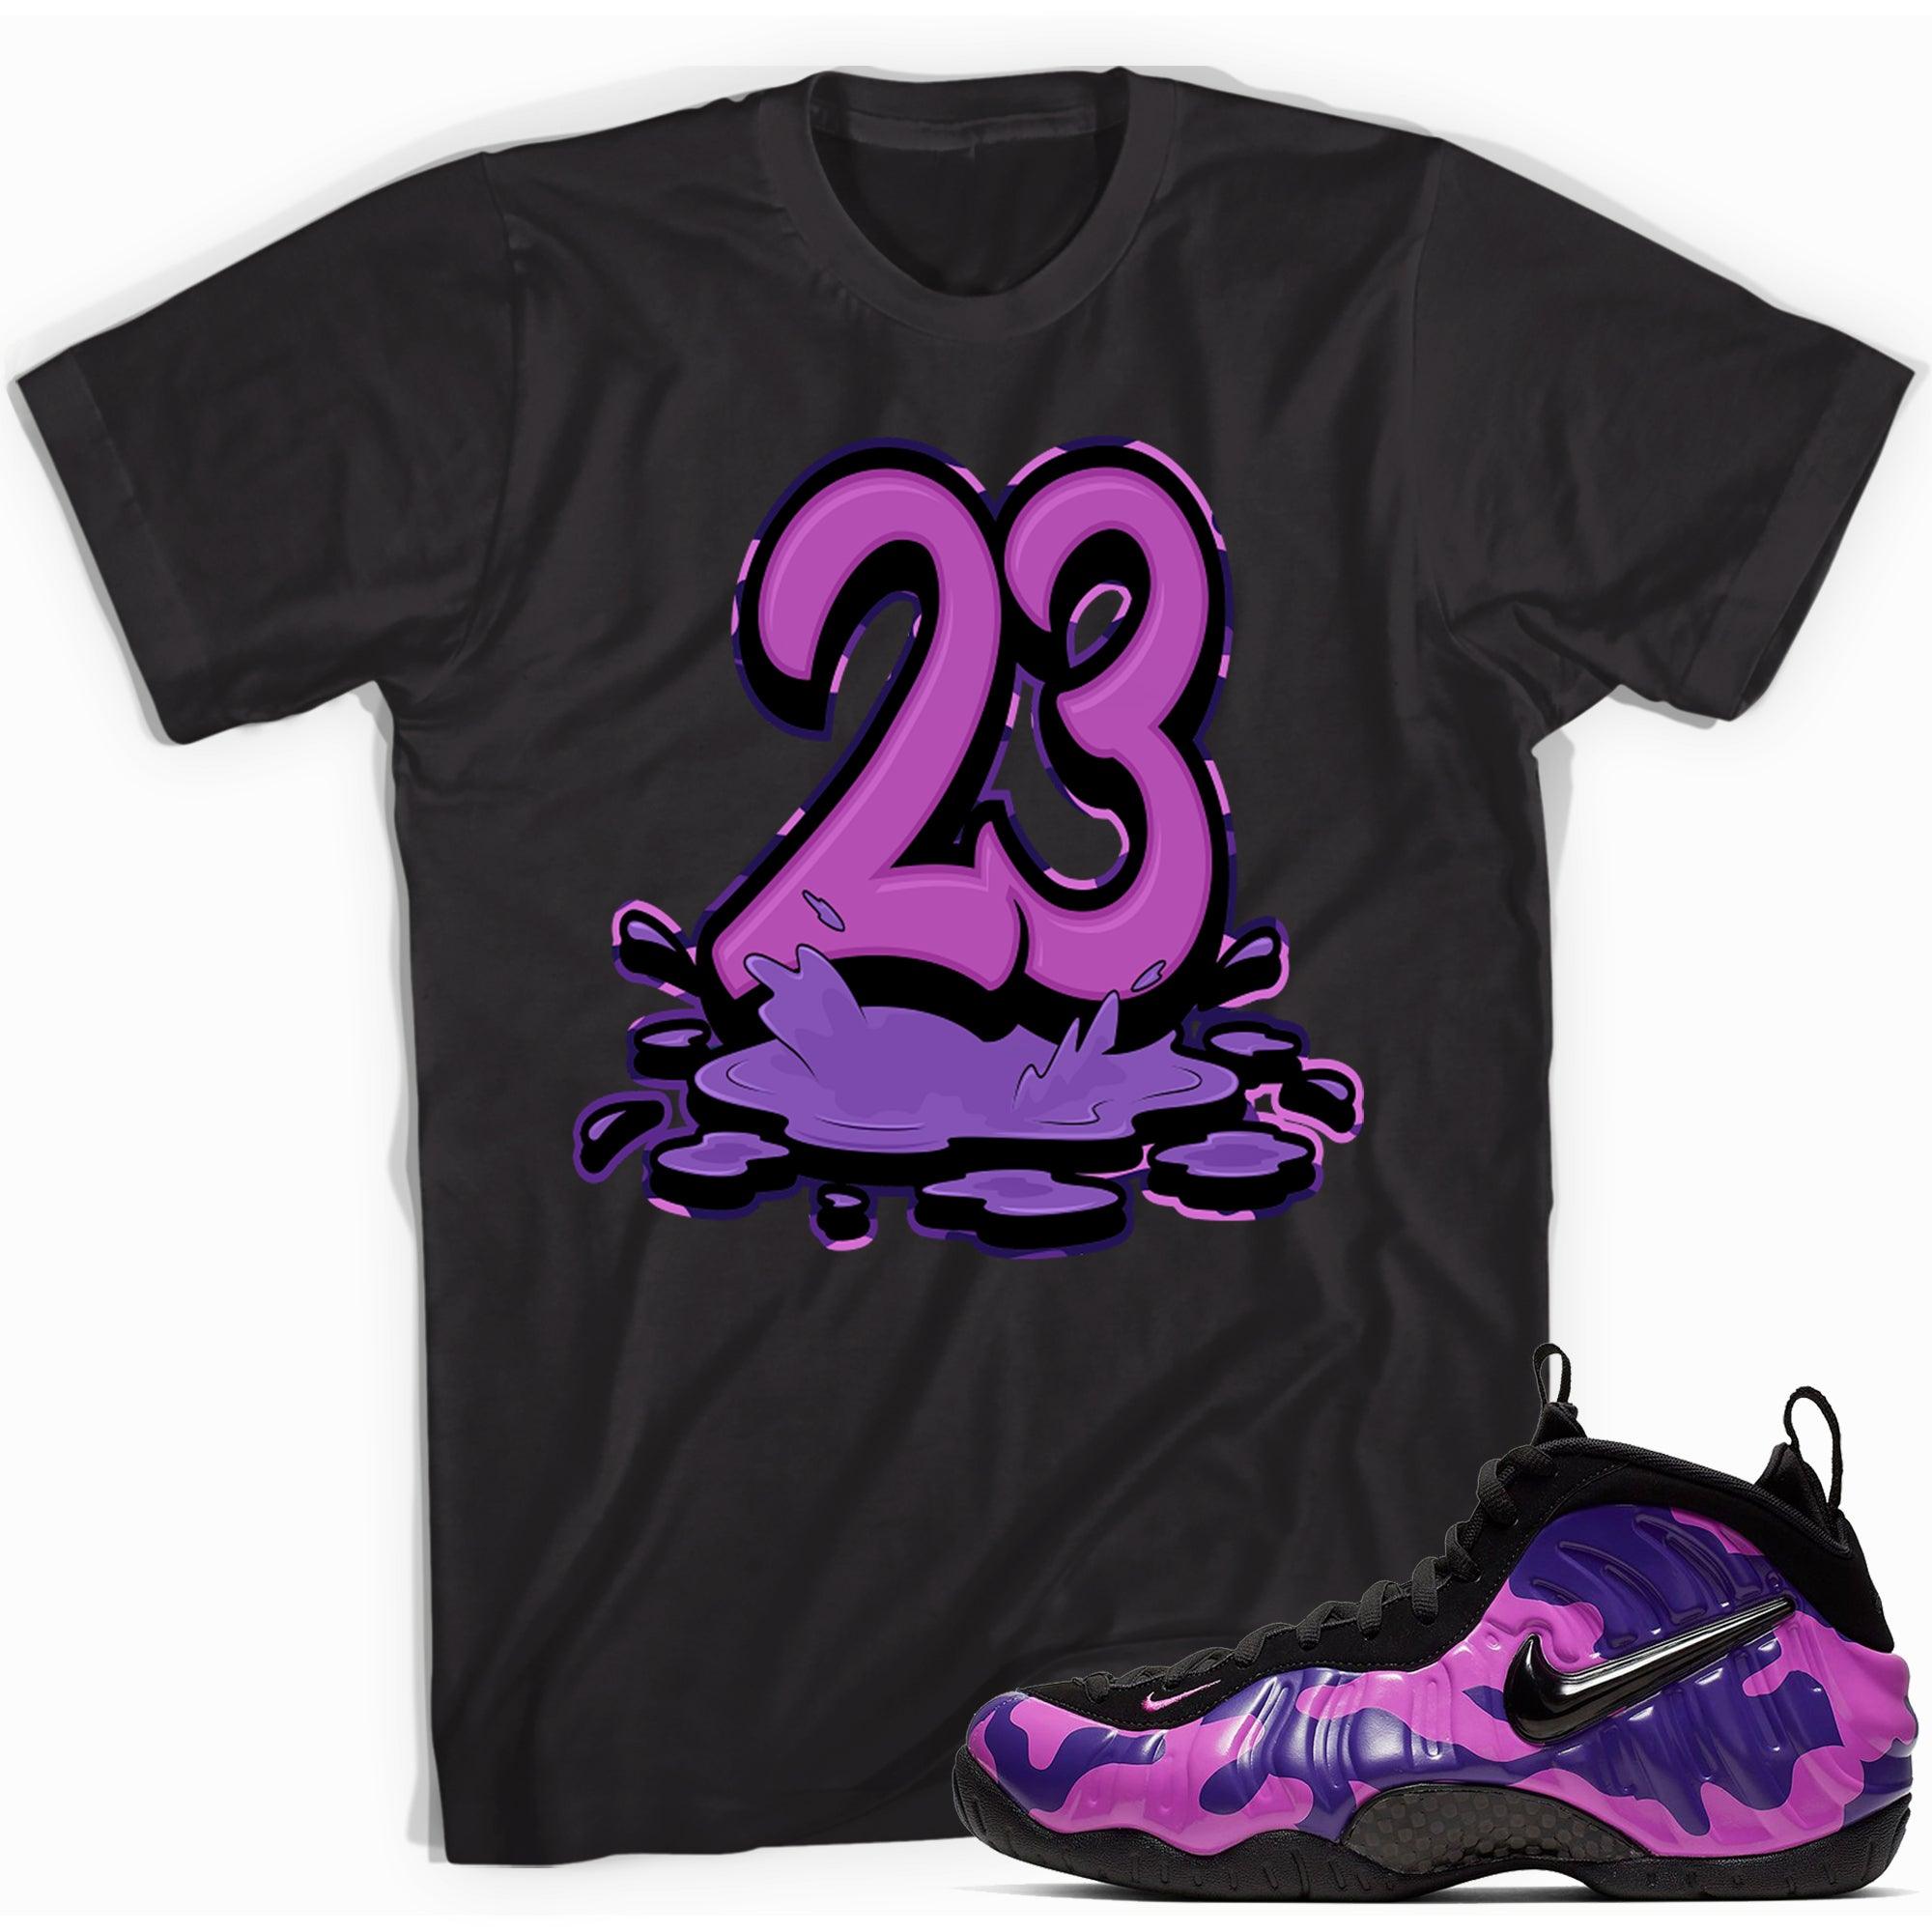 23 Melting Shirt Air Foamposite One Purple Camo photo